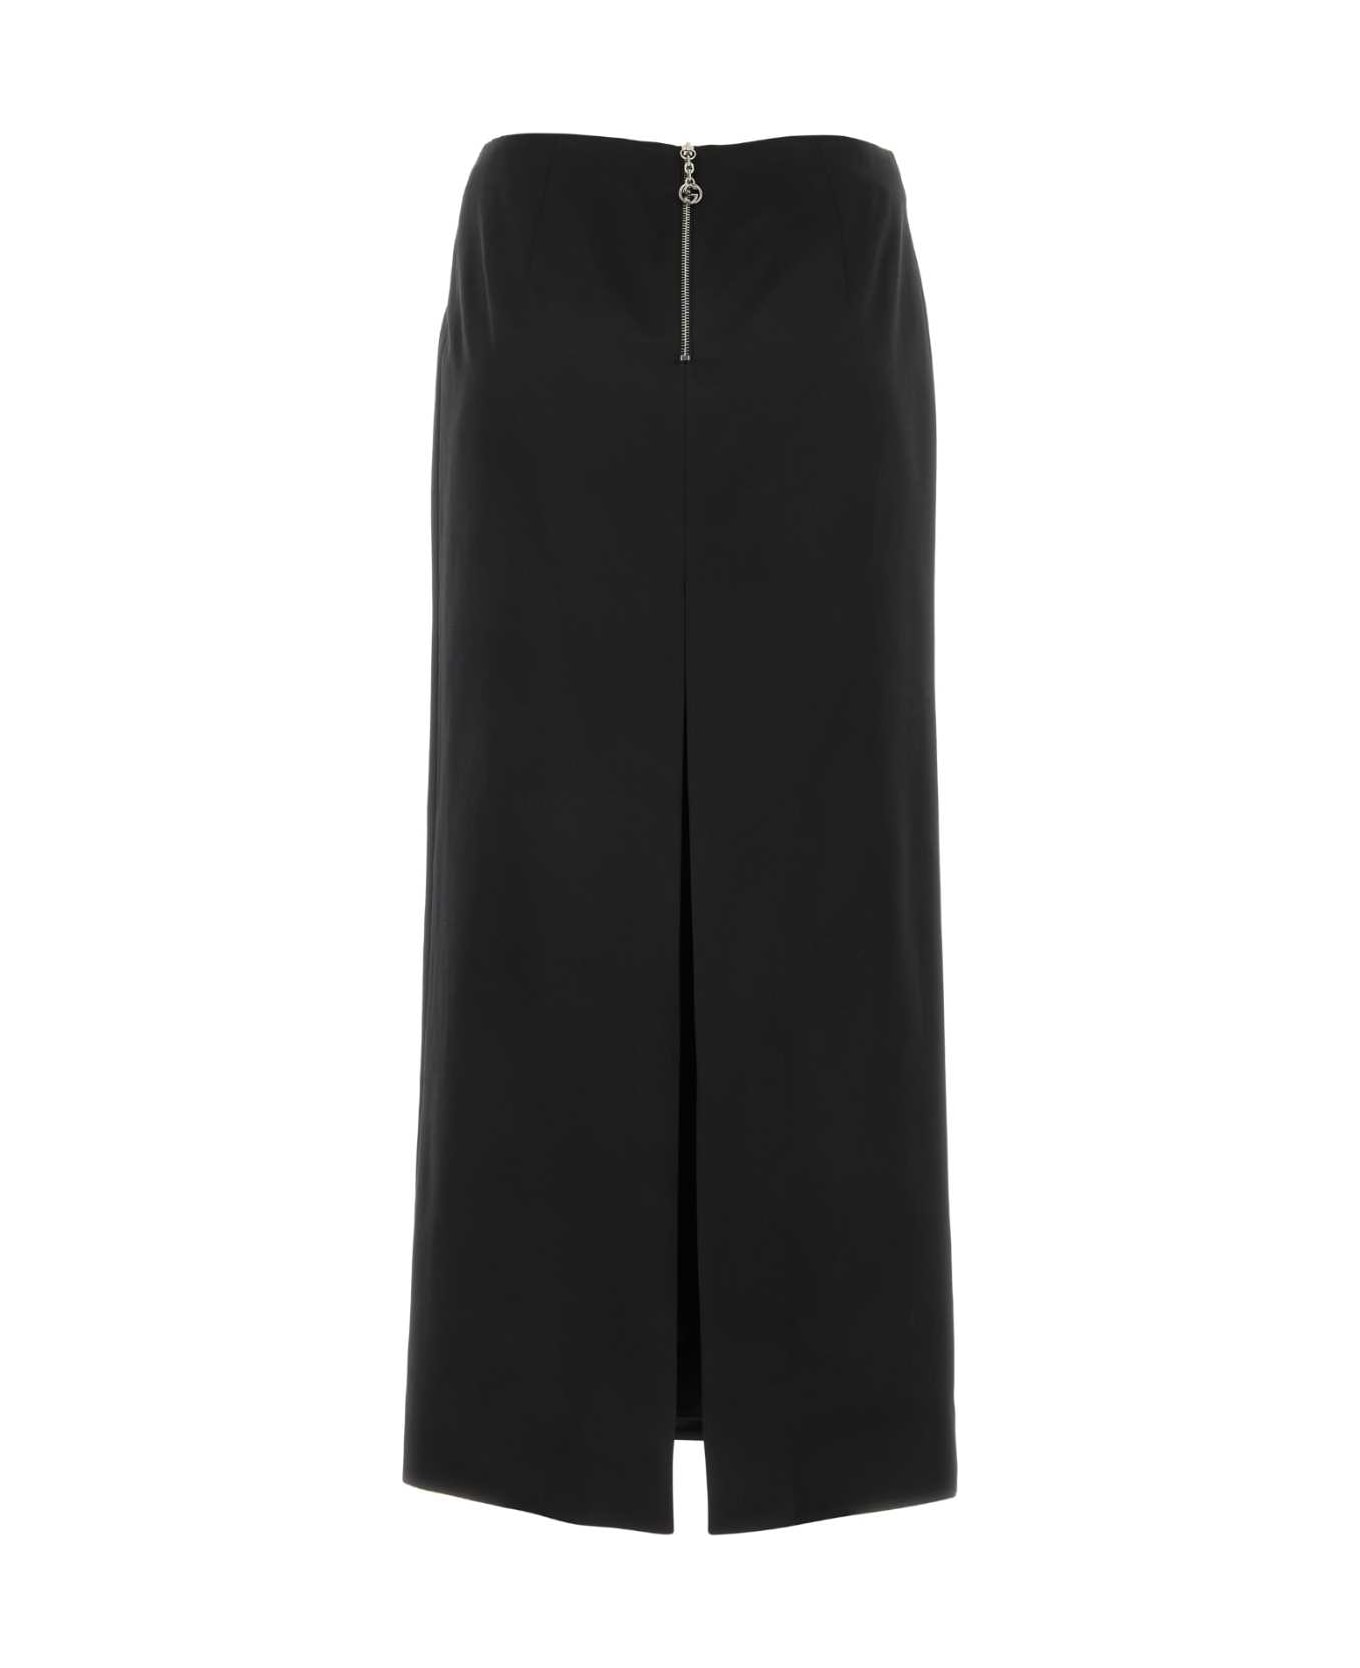 Gucci Black Satin Skirt - 1000 スカート